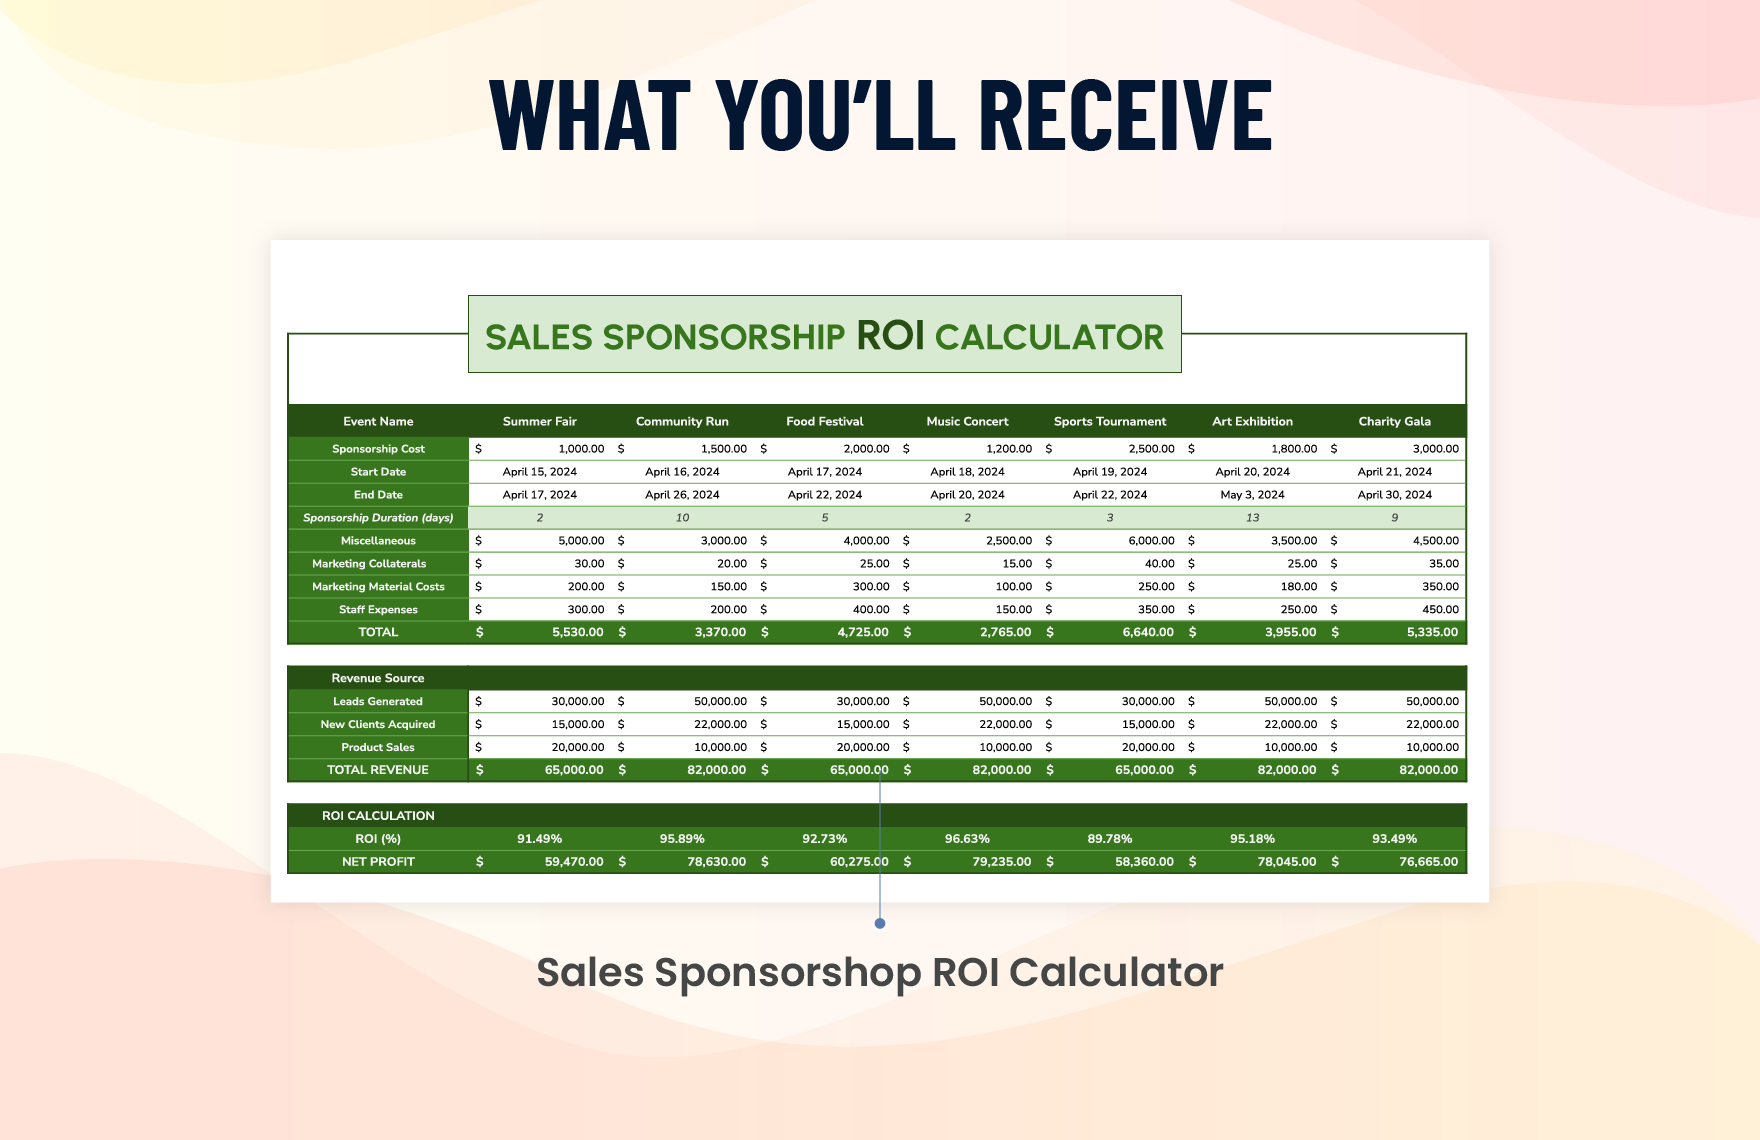 Sales Sponsorship ROI Calculator Template